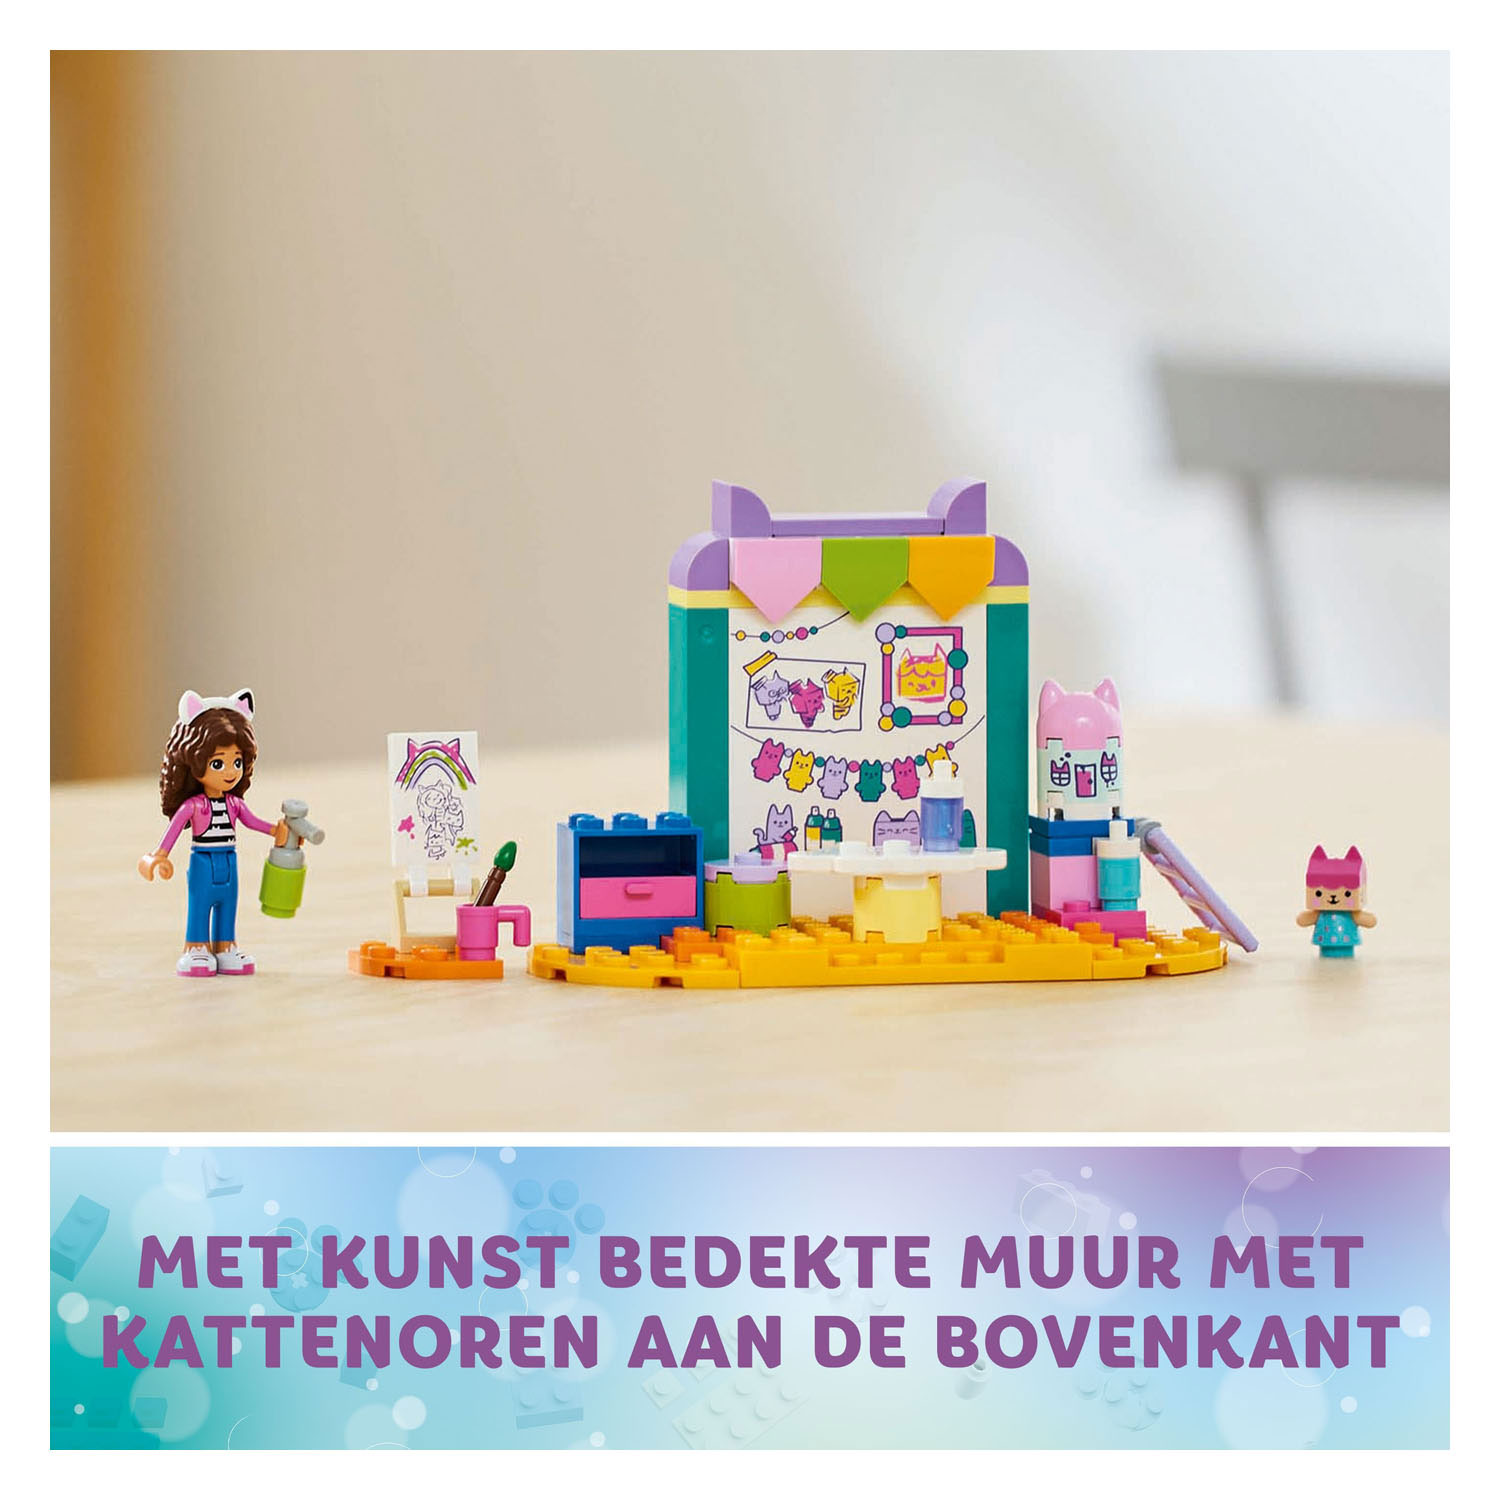 LEGO Gabby's Poppenhuis 10795 Knutselen met Babykitty